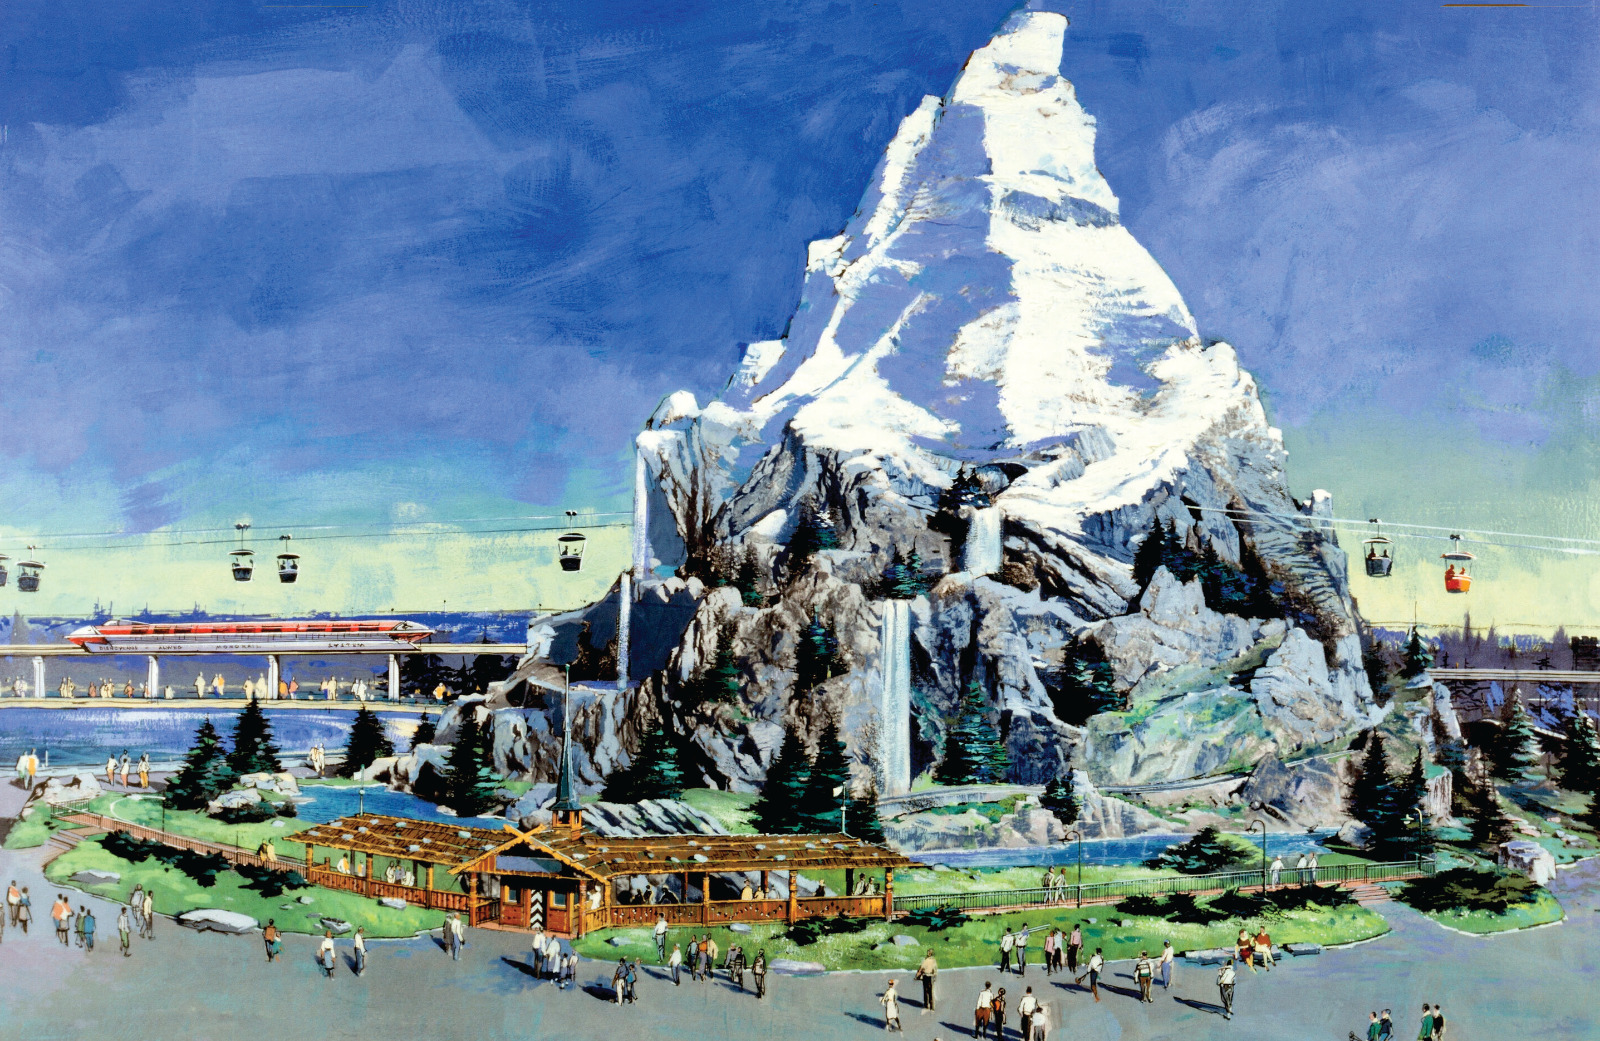 Fantasyland Matterhorn Bobsleds Disneyland Sky Buckets Monorail Retro Poster